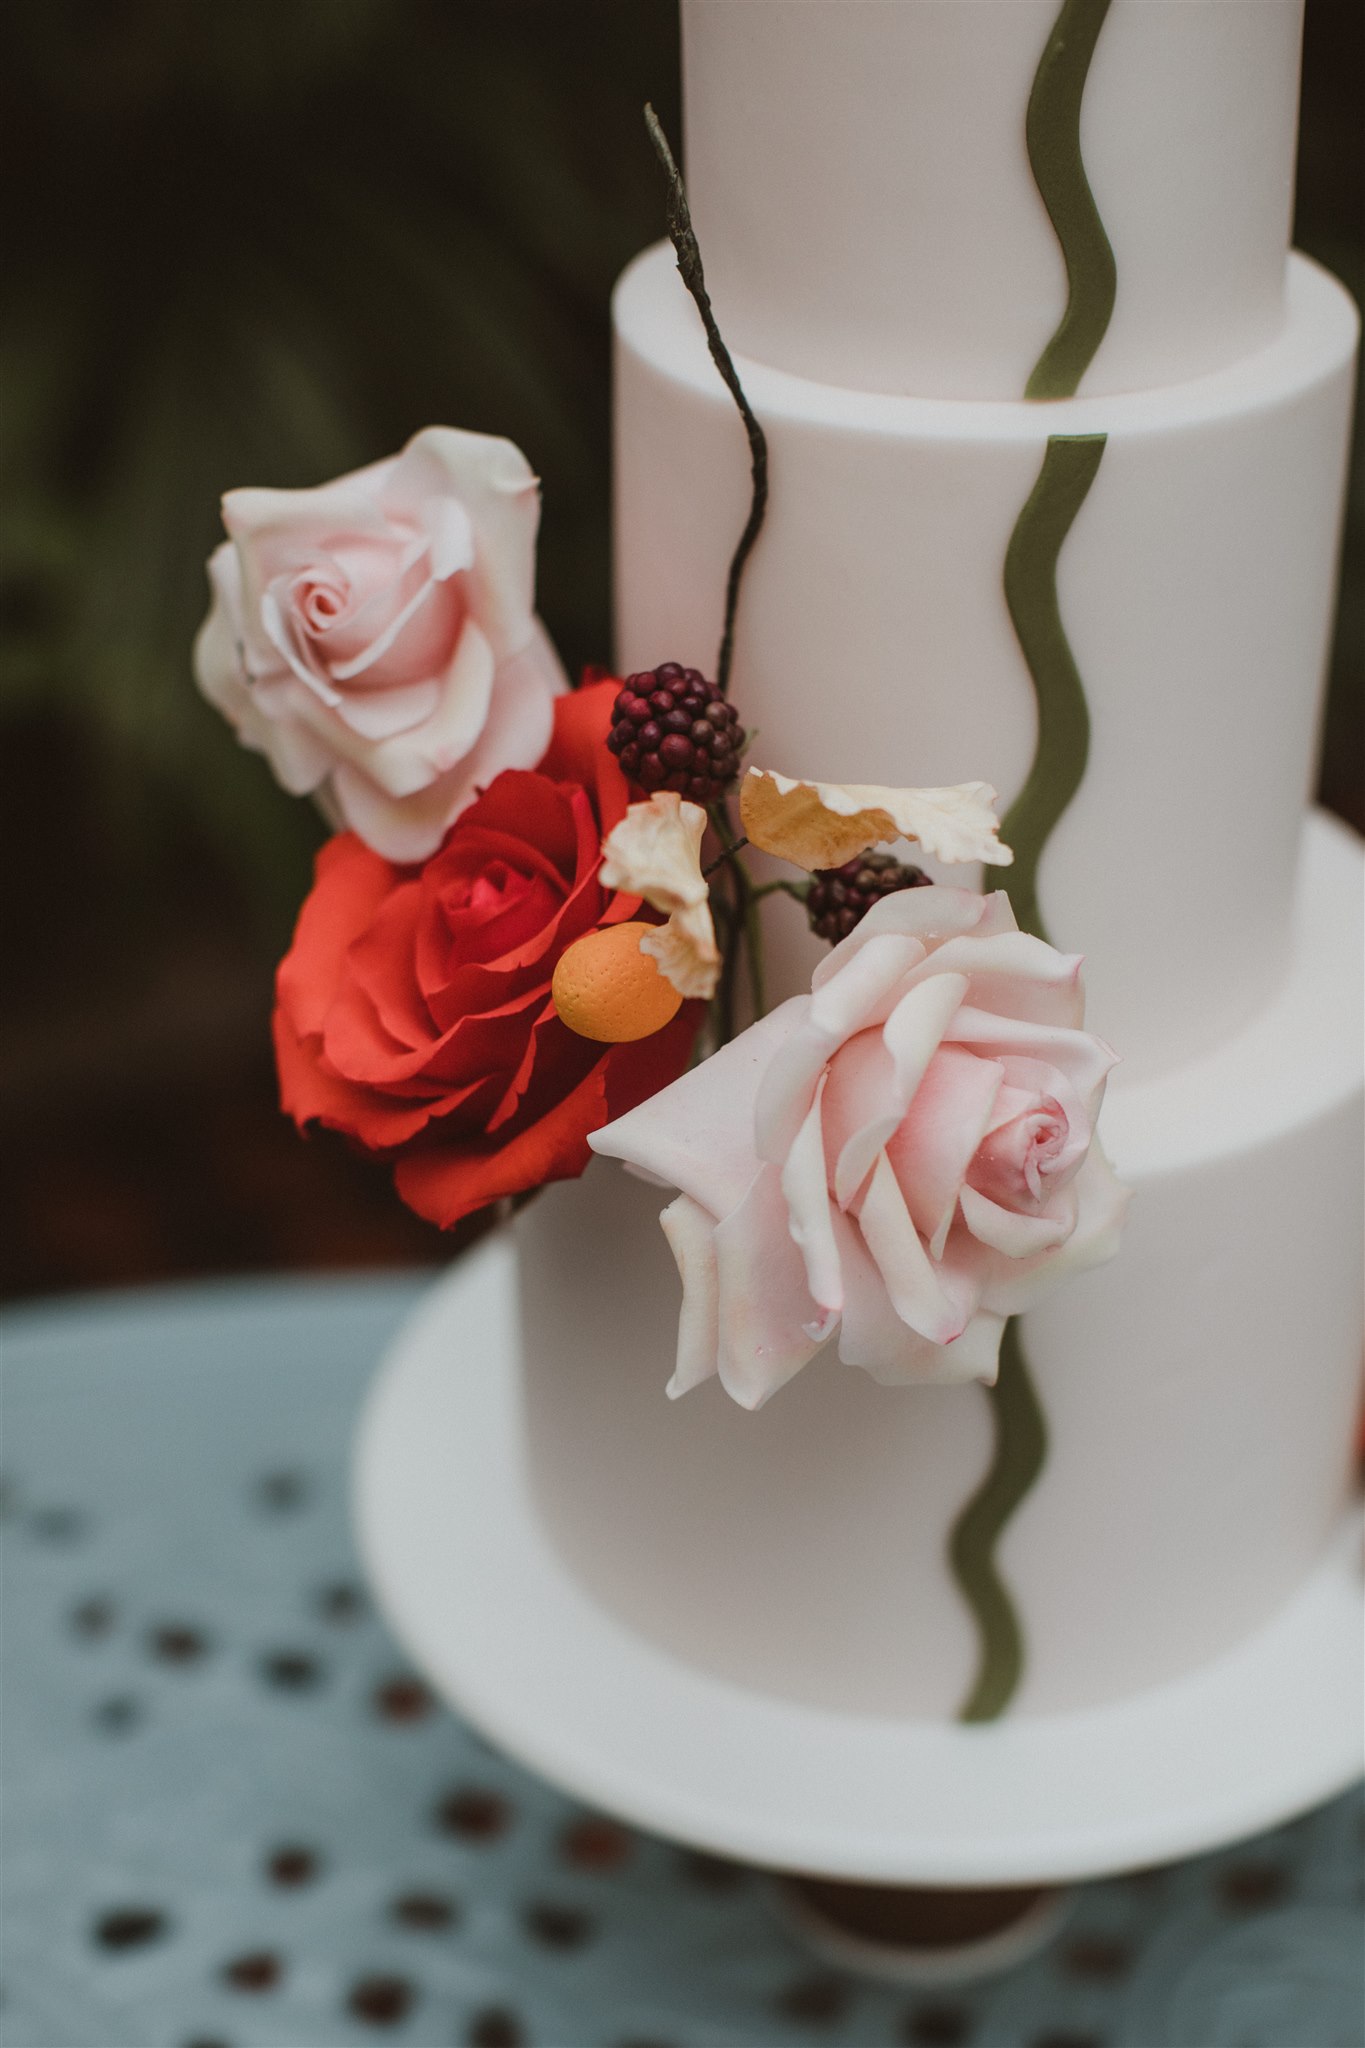 Wedding cake flowers